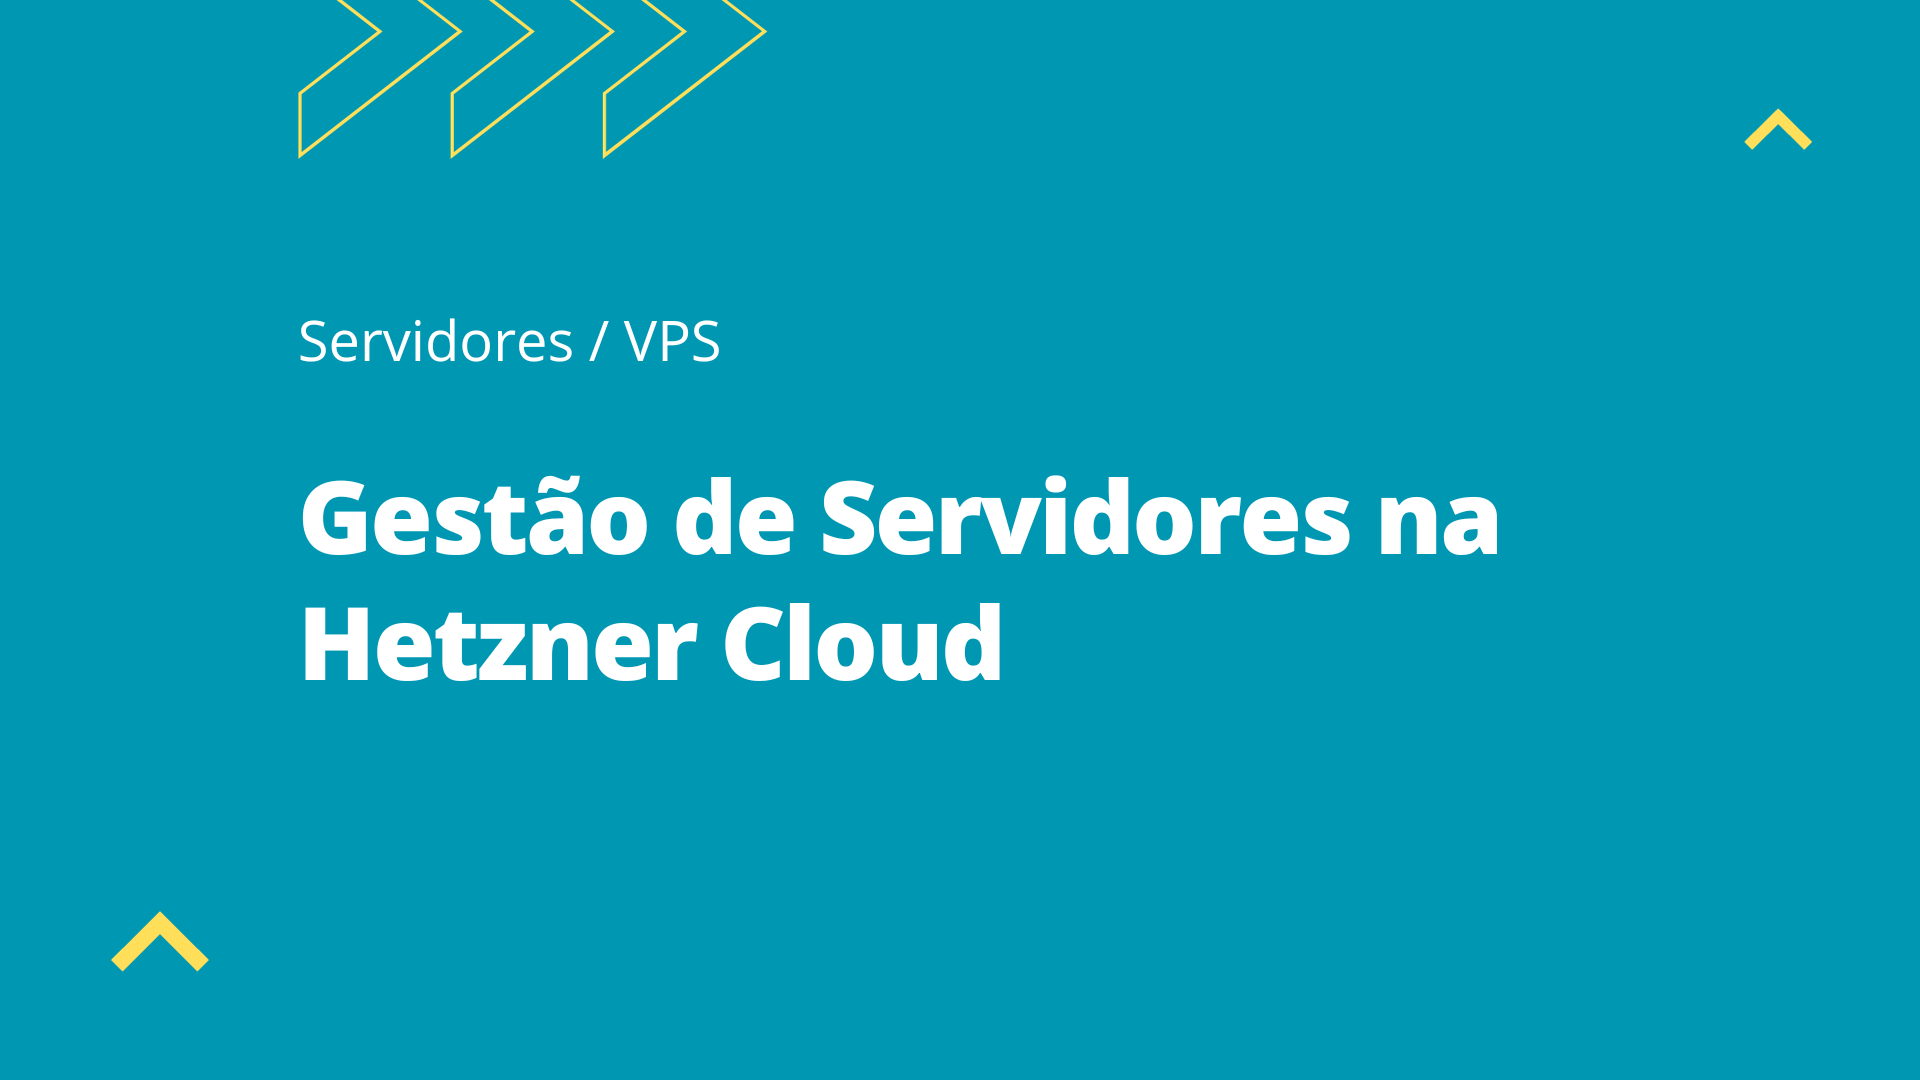 Gestão de Servidores VPS na Hetzner Cloud